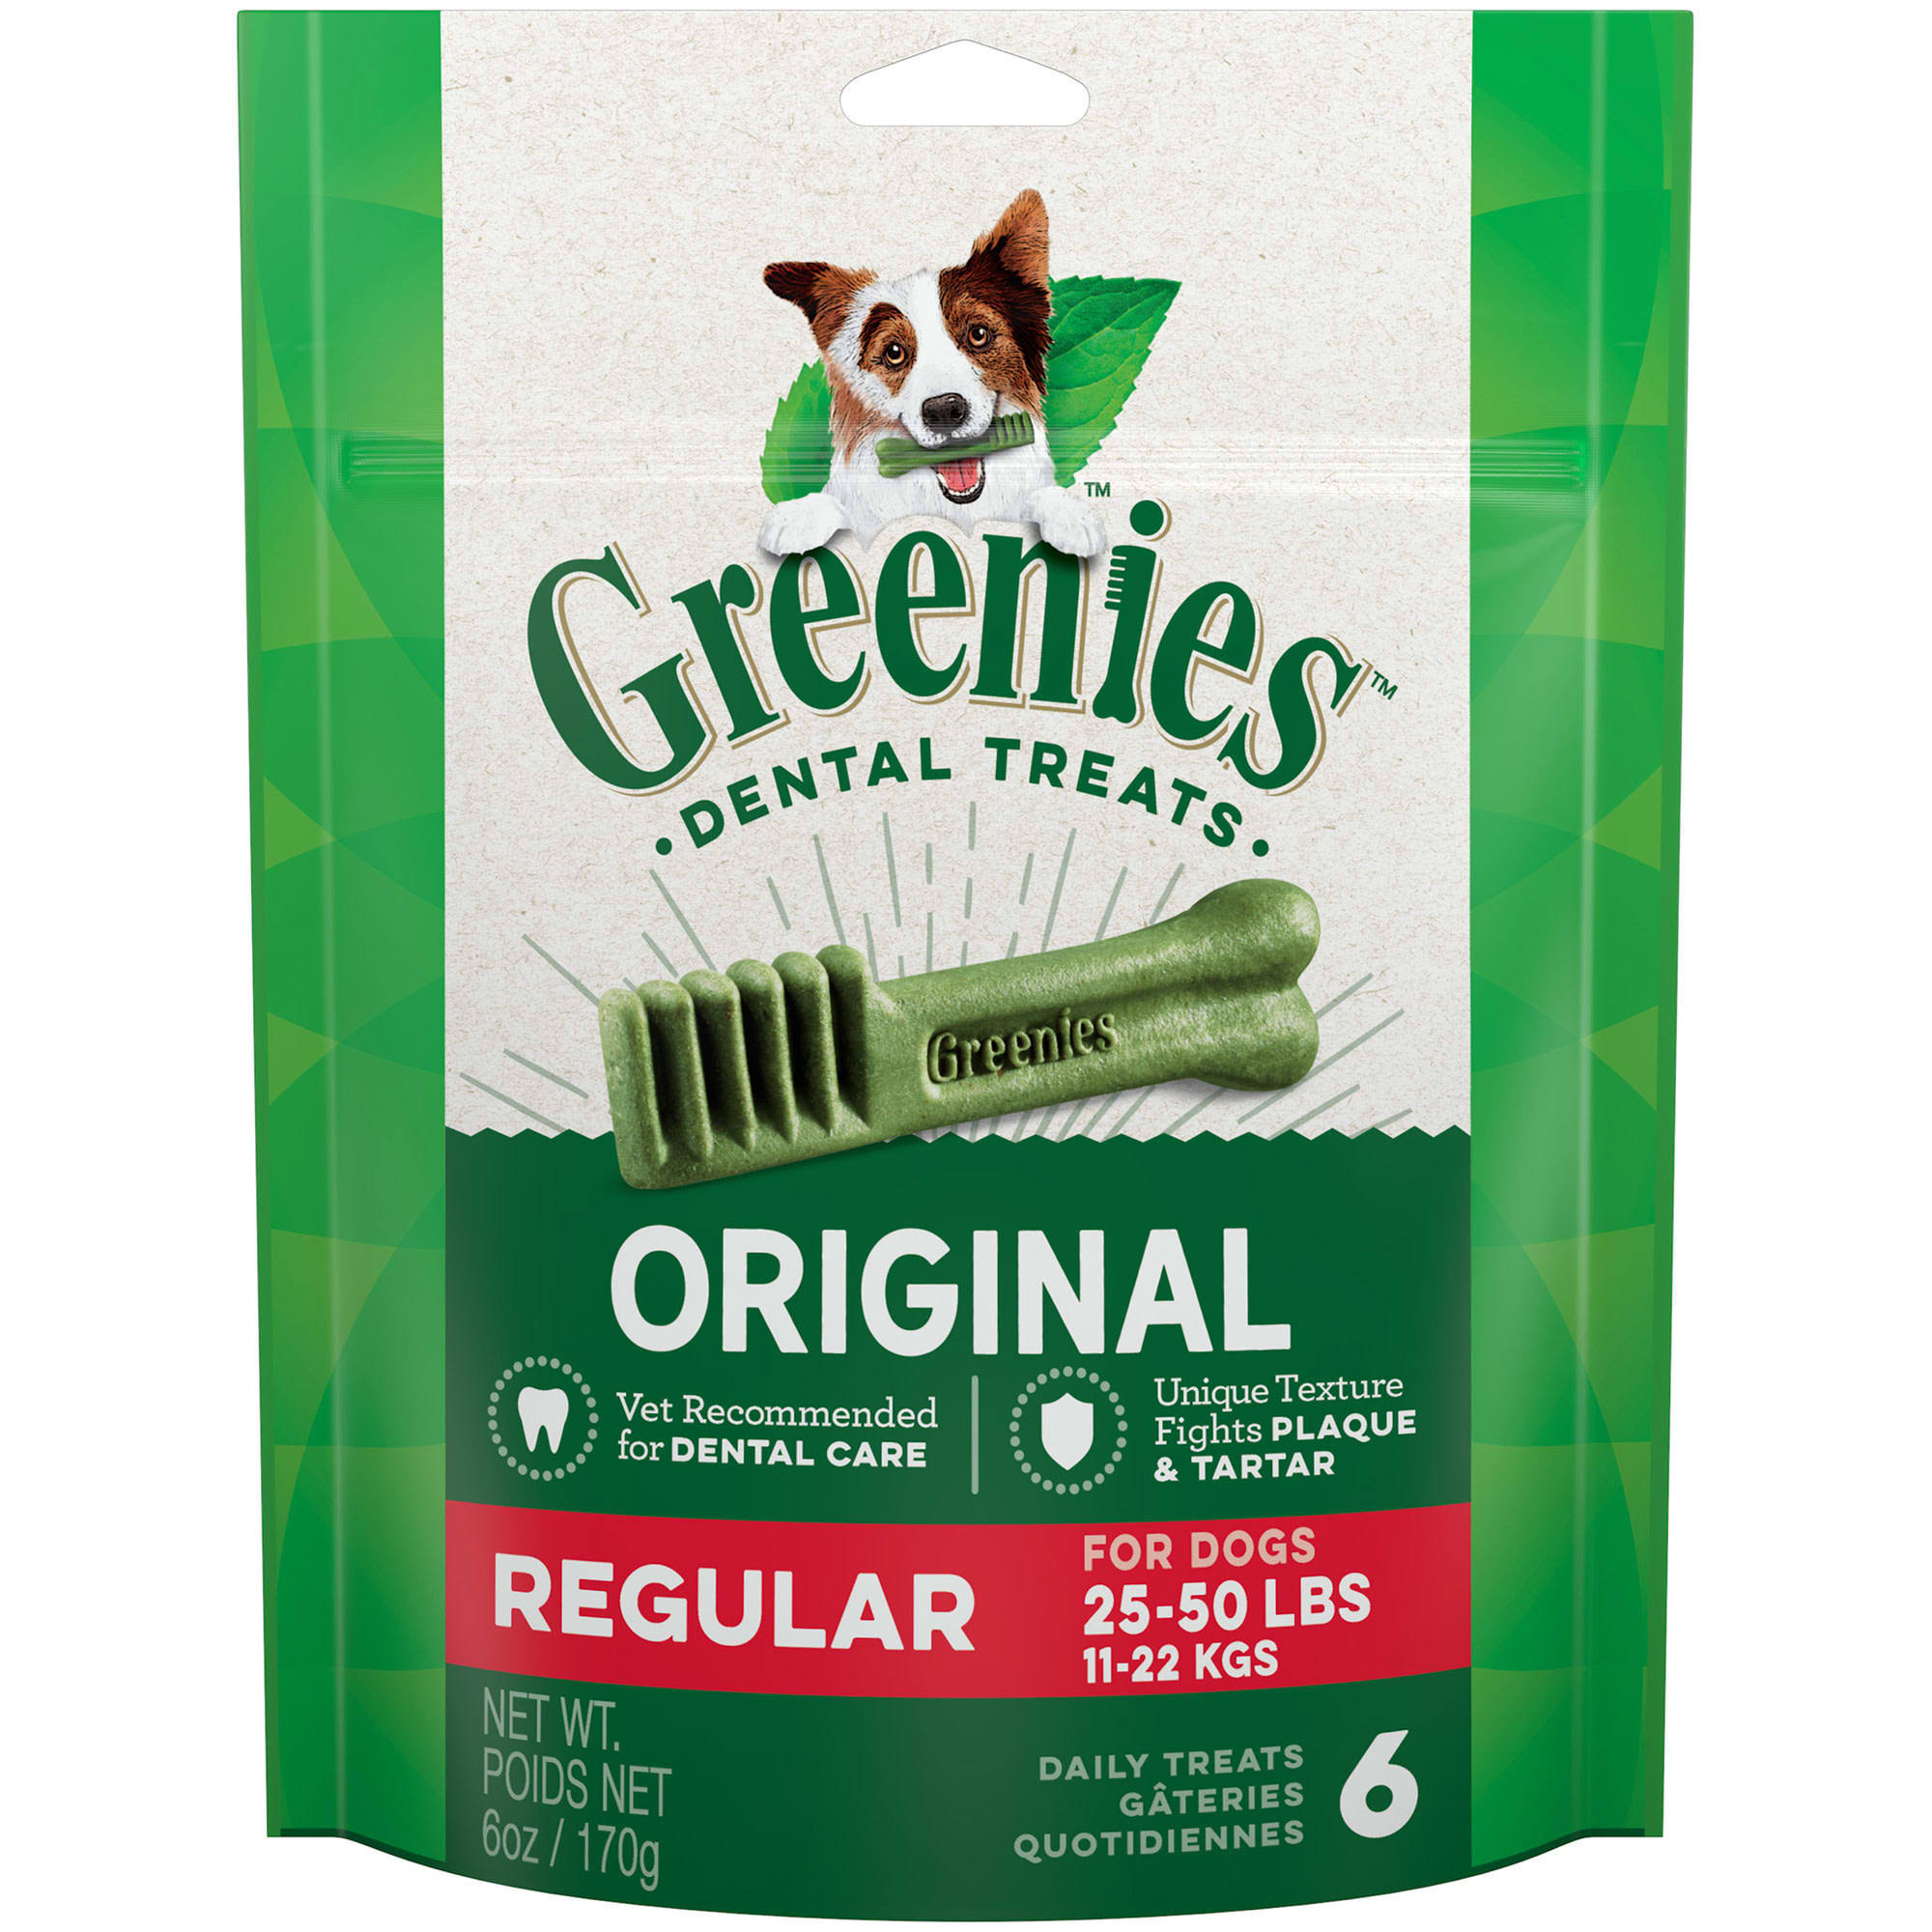 Greenies Dog Dental Chew Treats - Regular, 170g